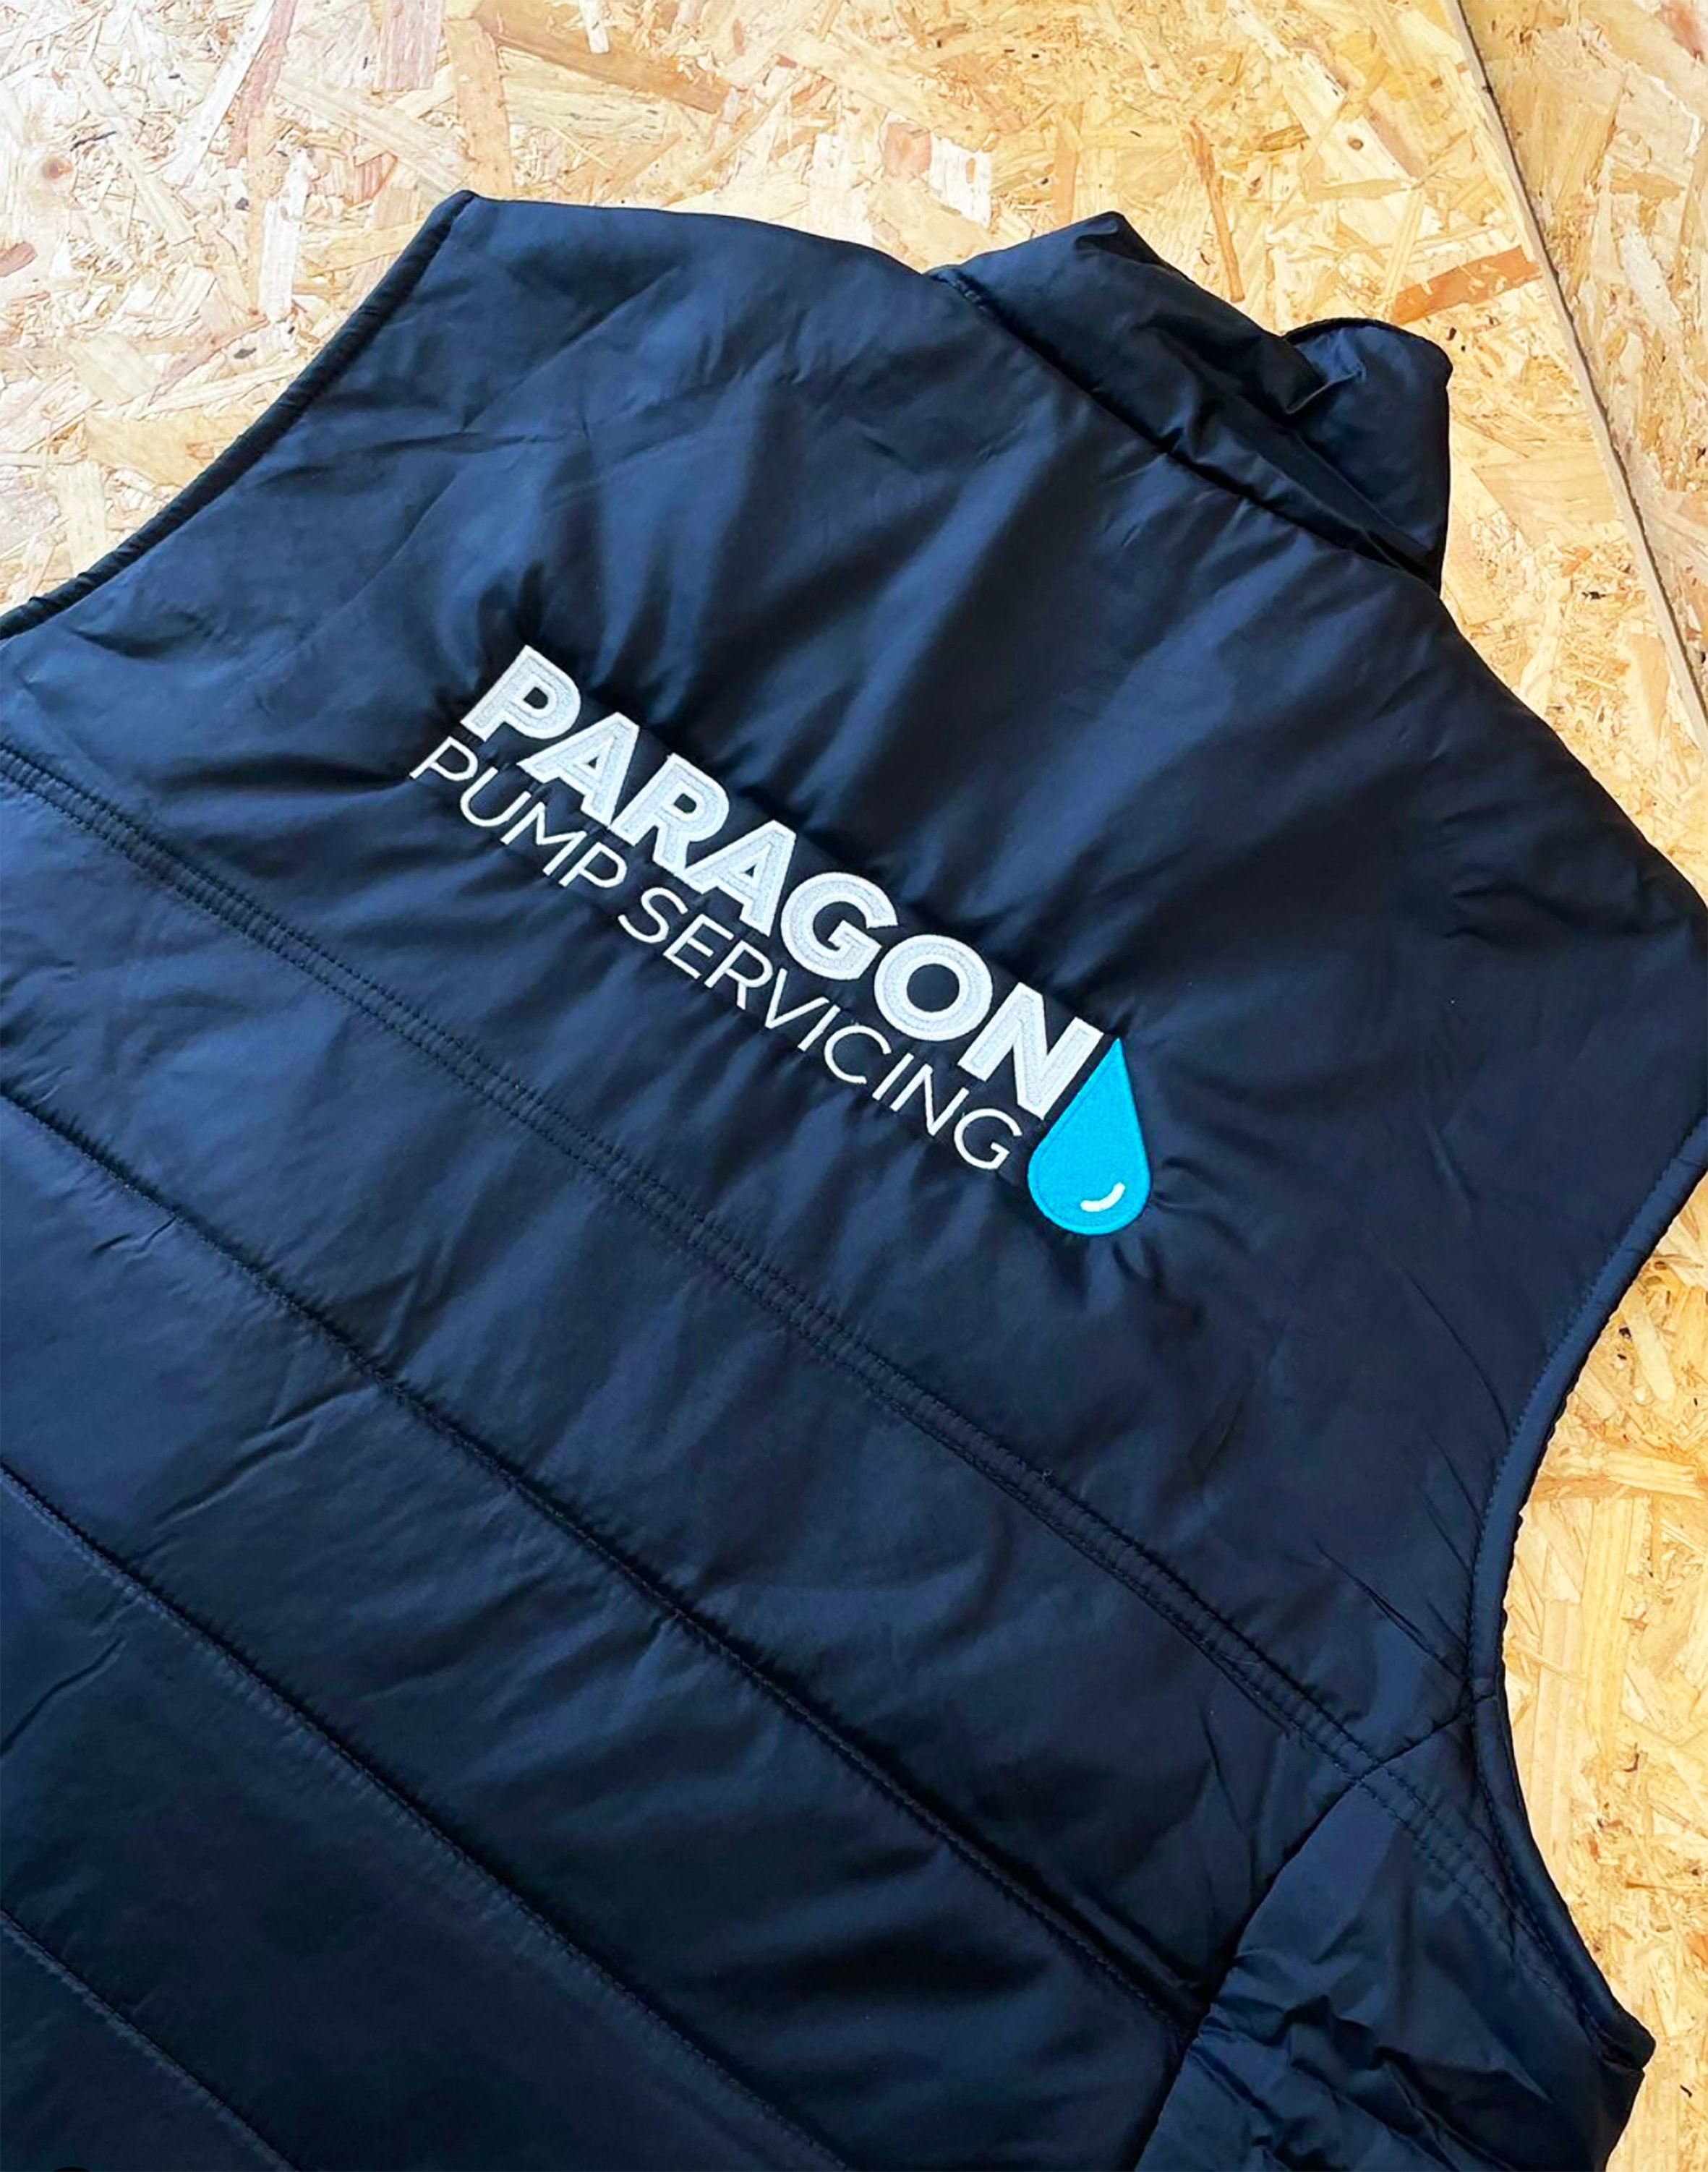 paragon services jacket.jpg